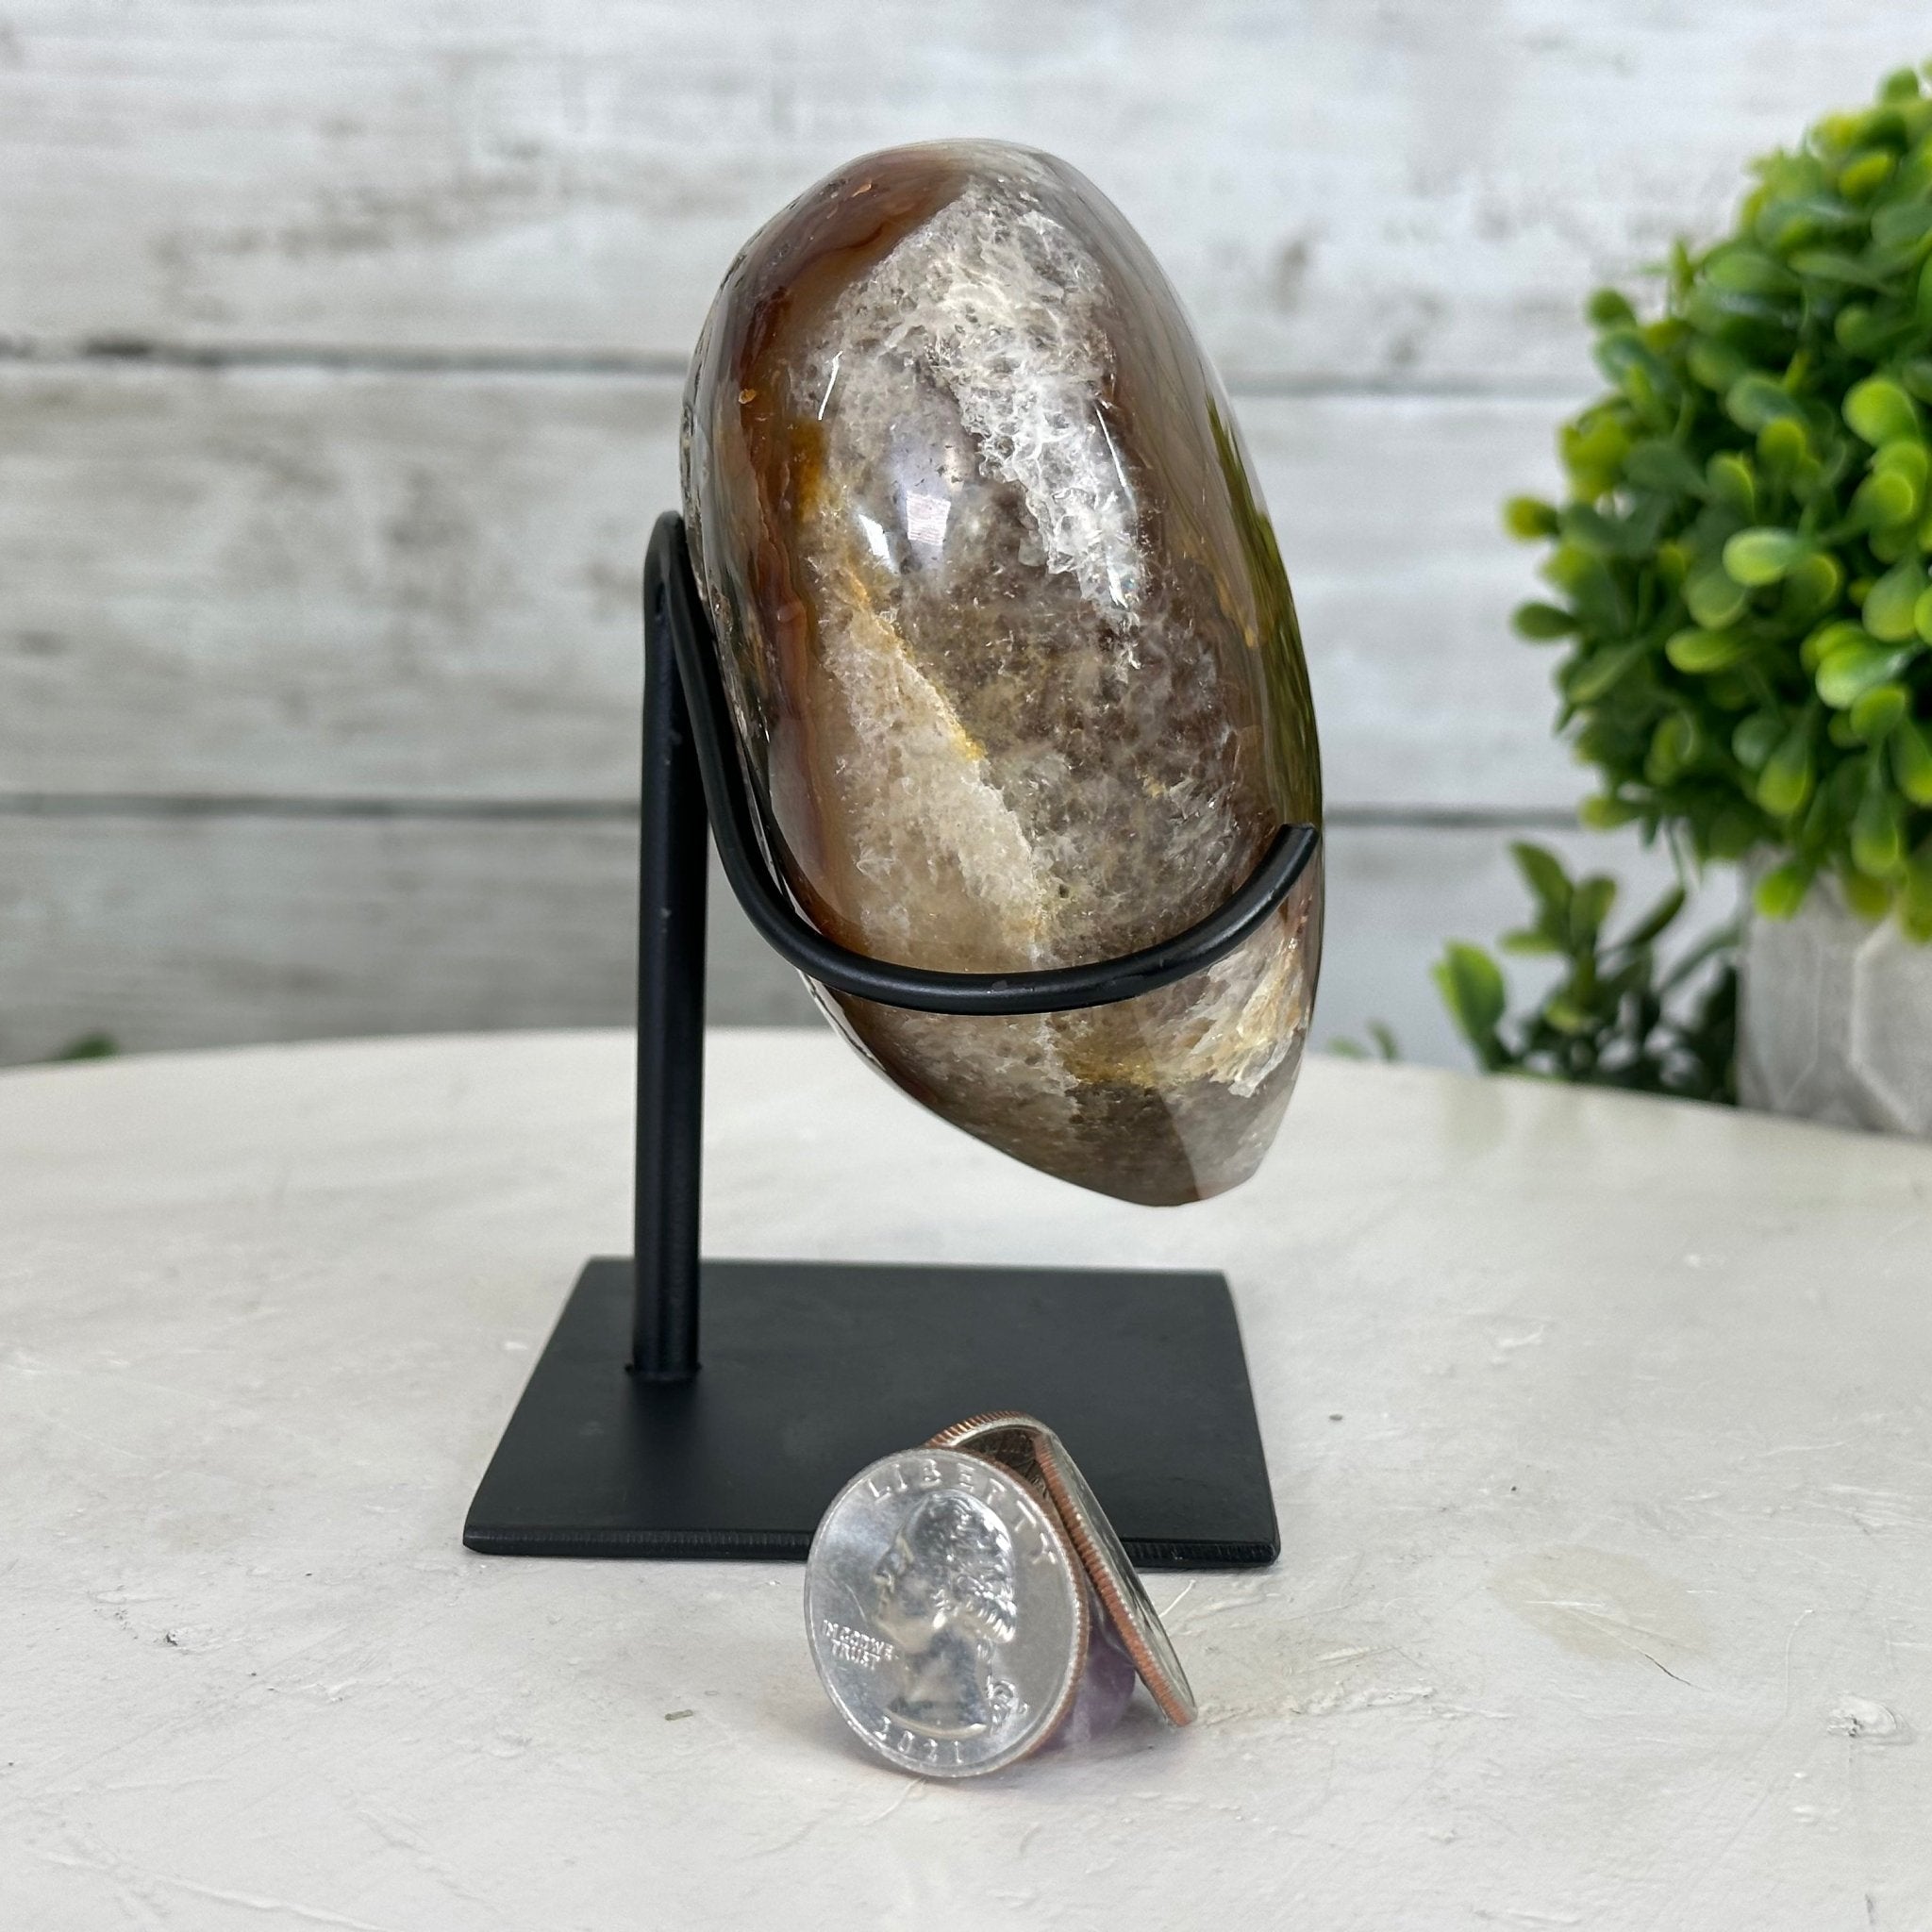 Polished Agate Heart Geode on a Metal Stand, 2.2 lbs & 4.8" Tall, Model #5468-0029 by Brazil Gems - Brazil GemsBrazil GemsPolished Agate Heart Geode on a Metal Stand, 2.2 lbs & 4.8" Tall, Model #5468-0029 by Brazil GemsHearts5468-0029